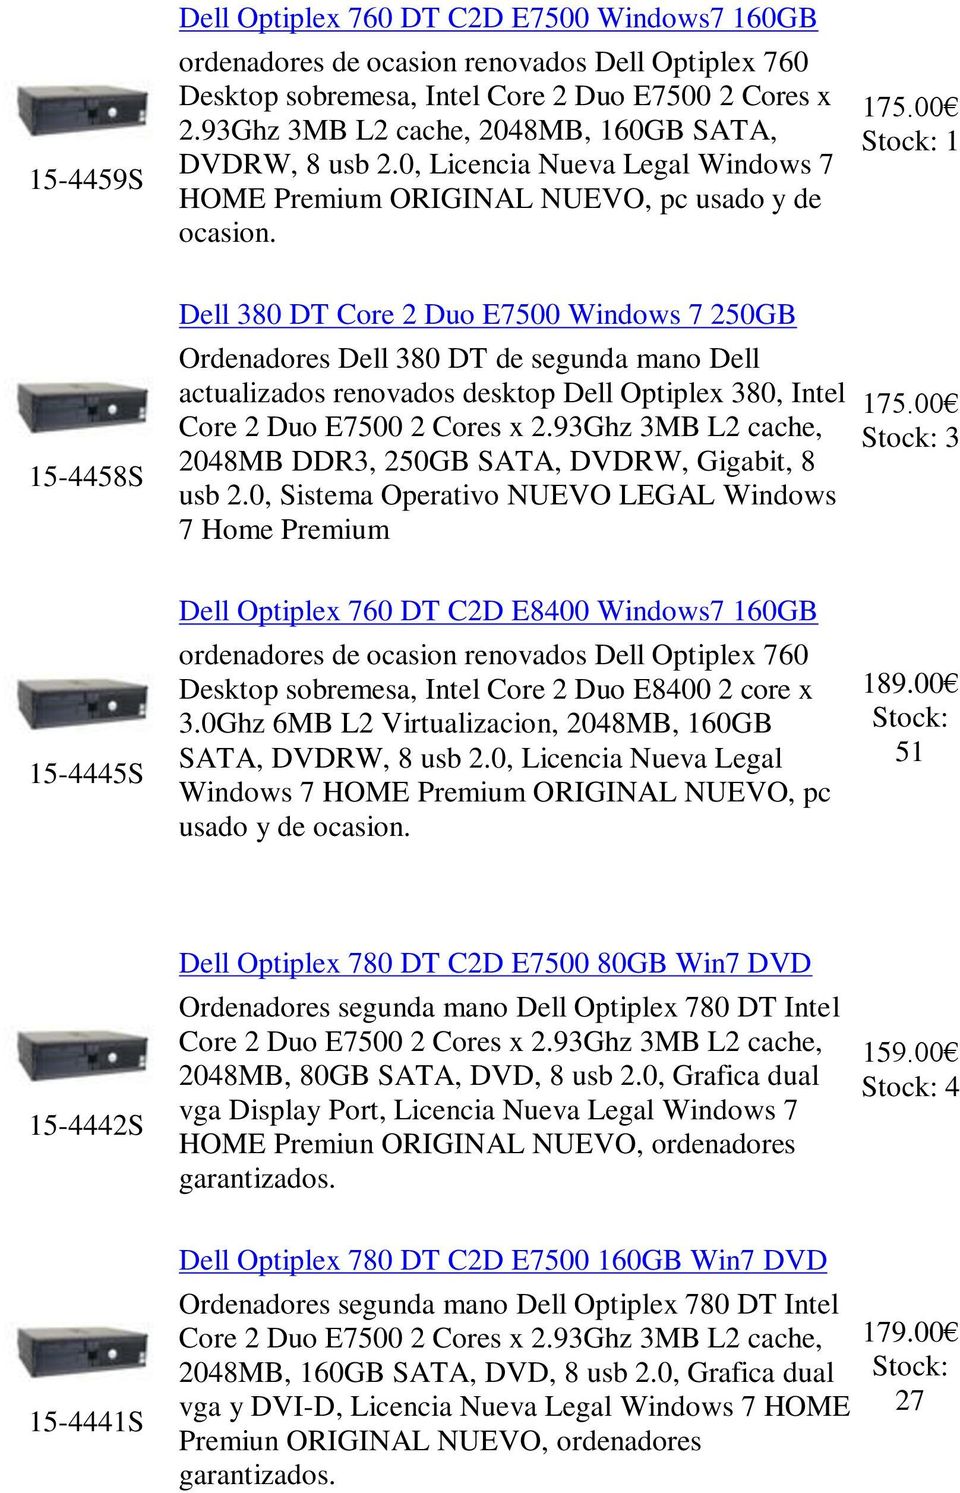 00 15-4458S Dell 380 DT Core 2 Duo E7500 Windows 7 250GB Ordenadores Dell 380 DT de segunda mano Dell actualizados renovados desktop Dell Optiplex 380, Intel Core 2 Duo E7500 2 Cores x 2.